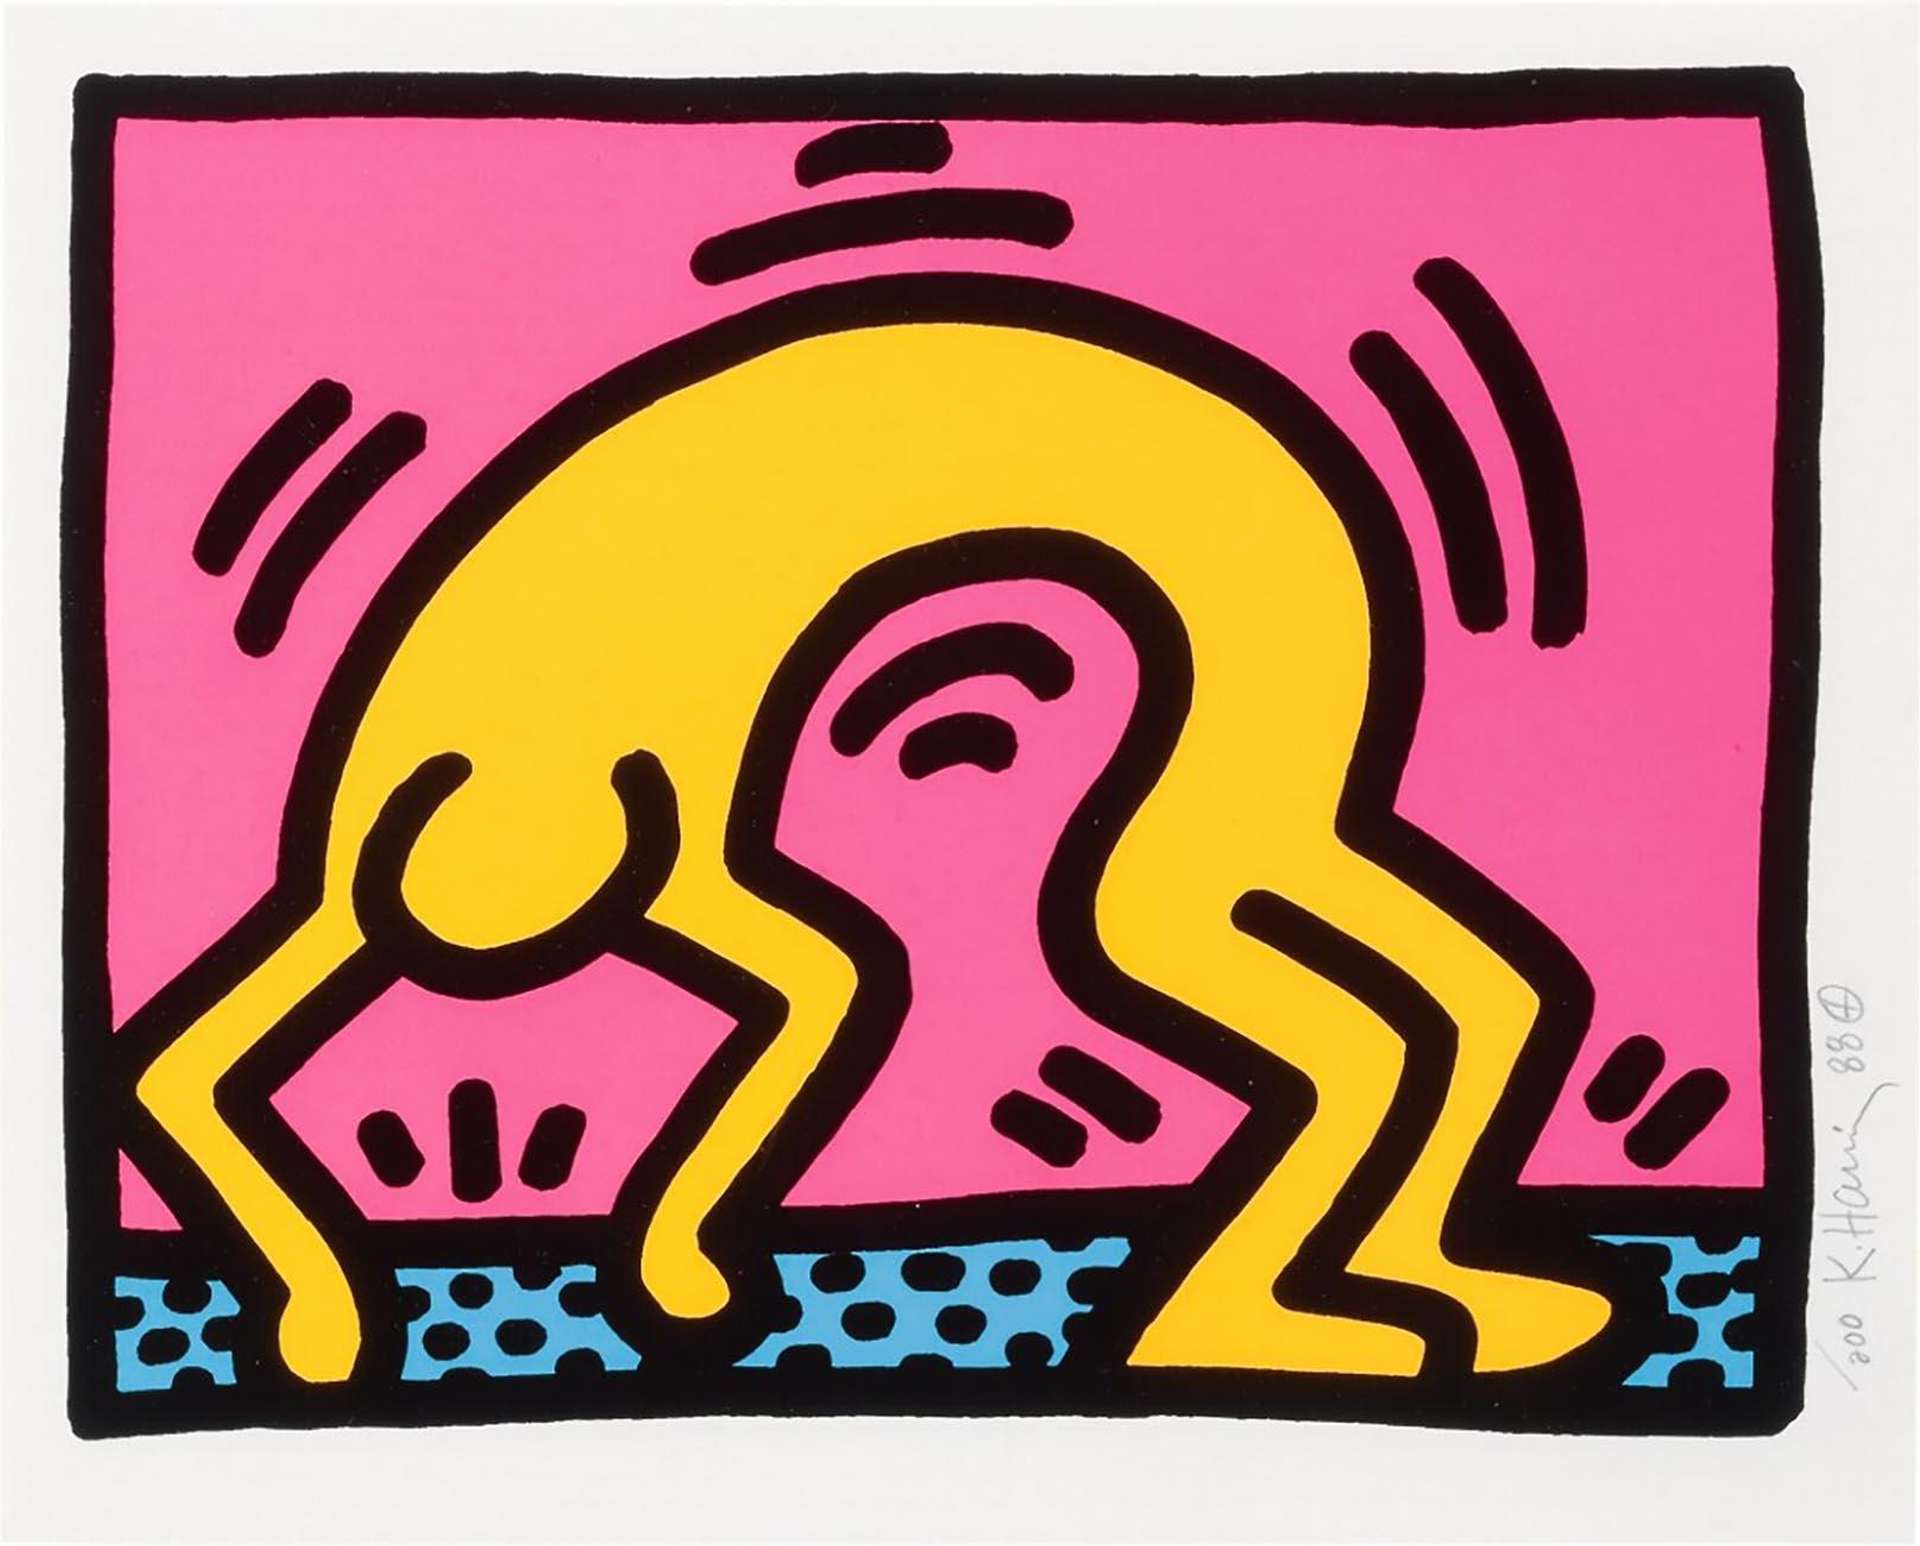 Keith Haring’s Pop Shop II, Plate III. A Pop Art screenprint of a yellow, animated character bending backwards.